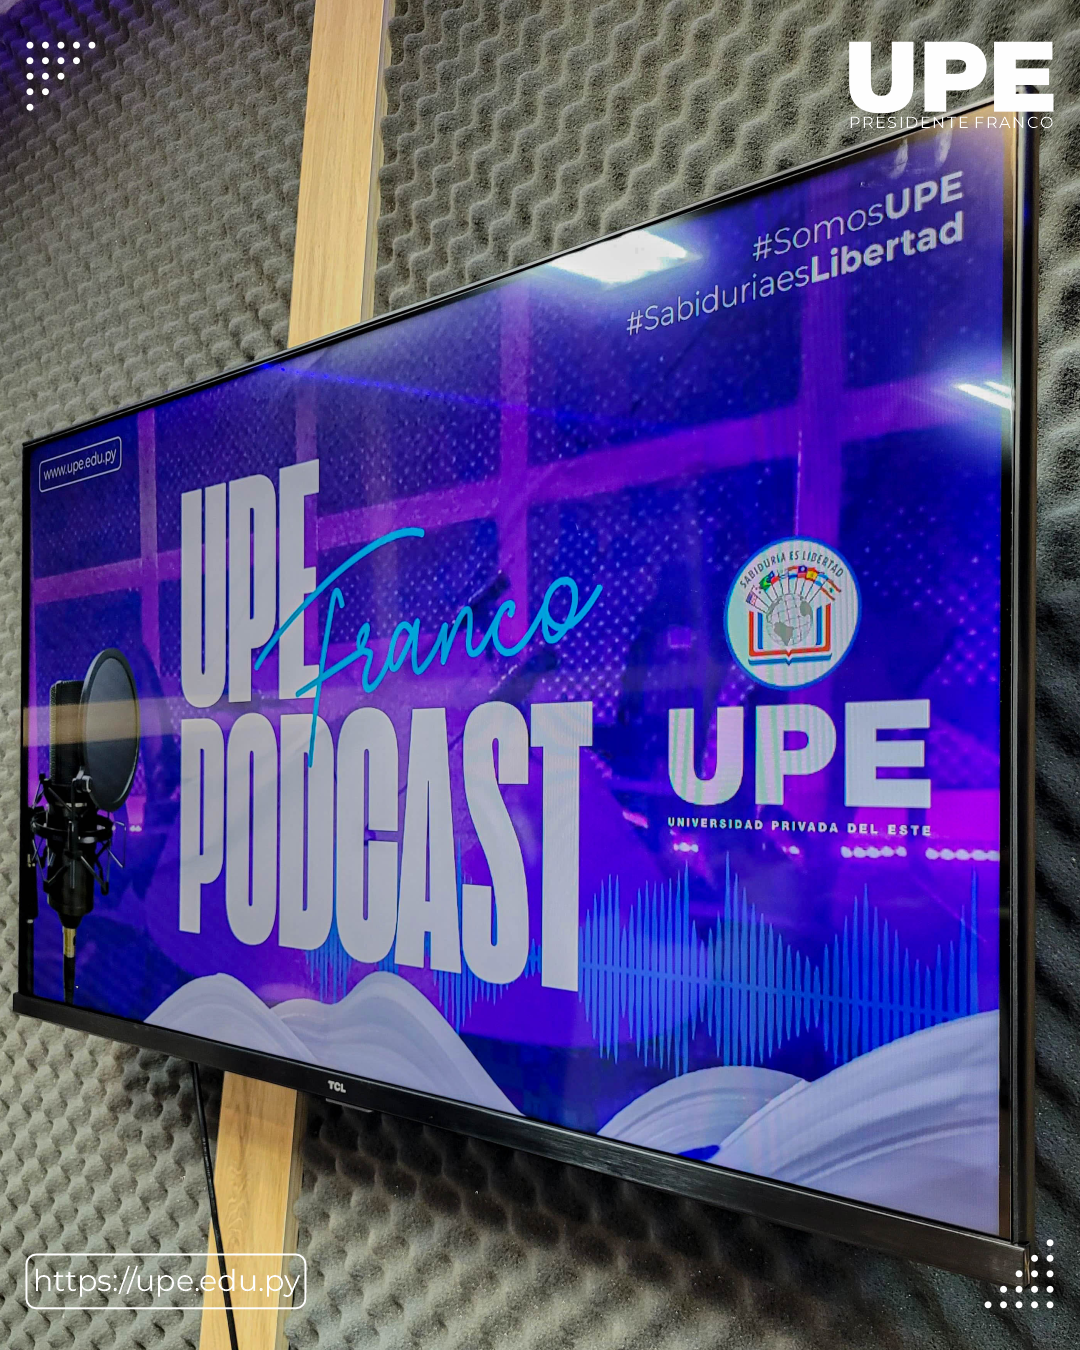 UPE Franco Podcast